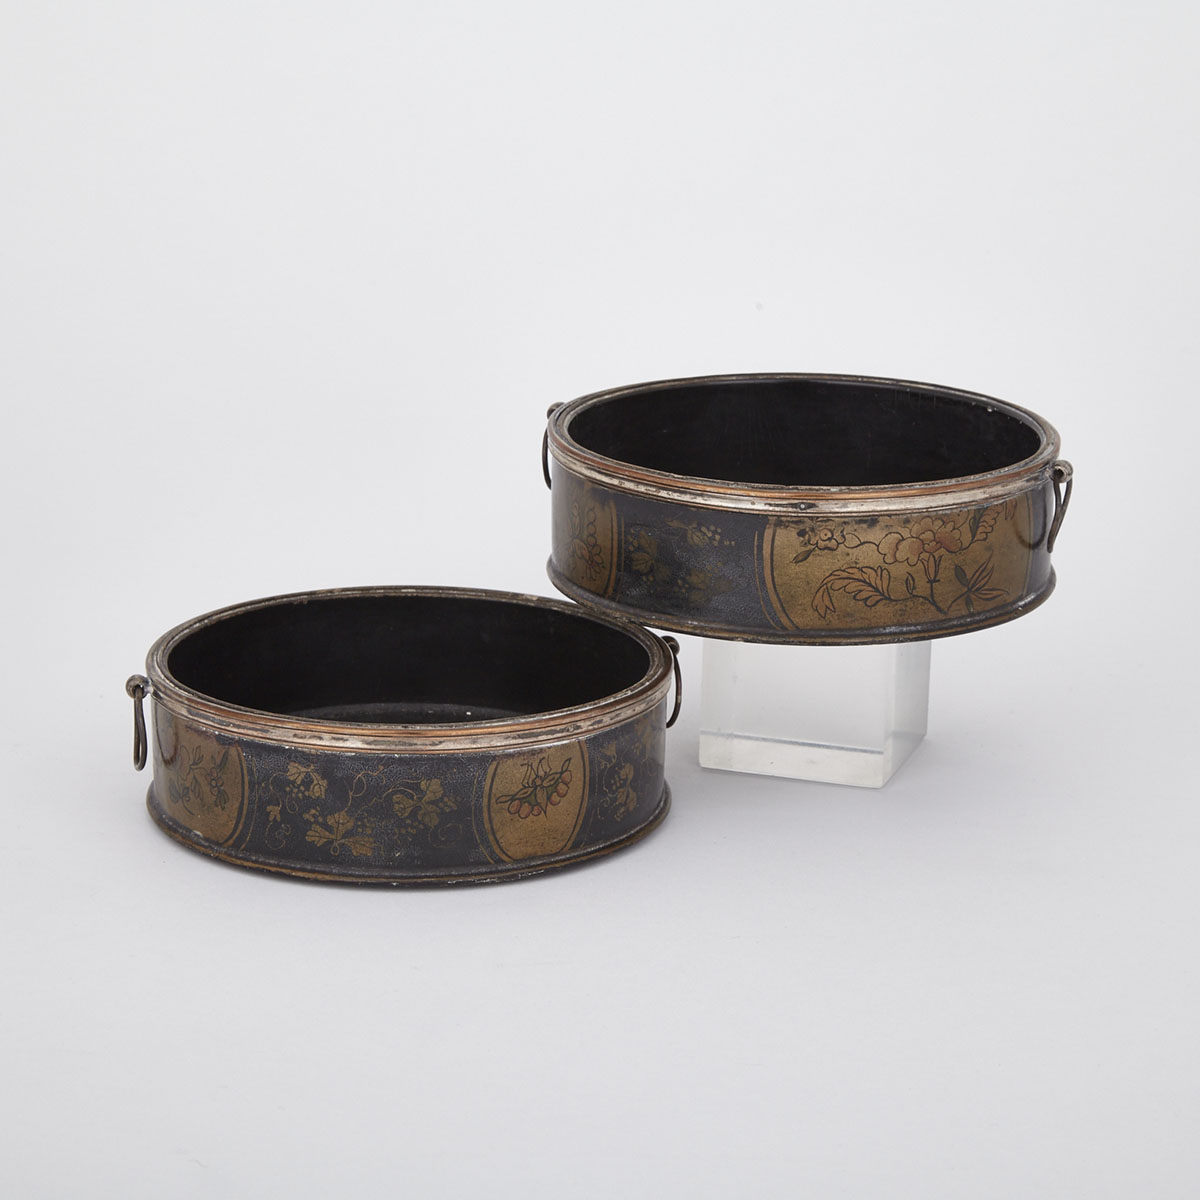 Pair of Regency Black Japanned Papier Maché Wine Coasters, early 19th century